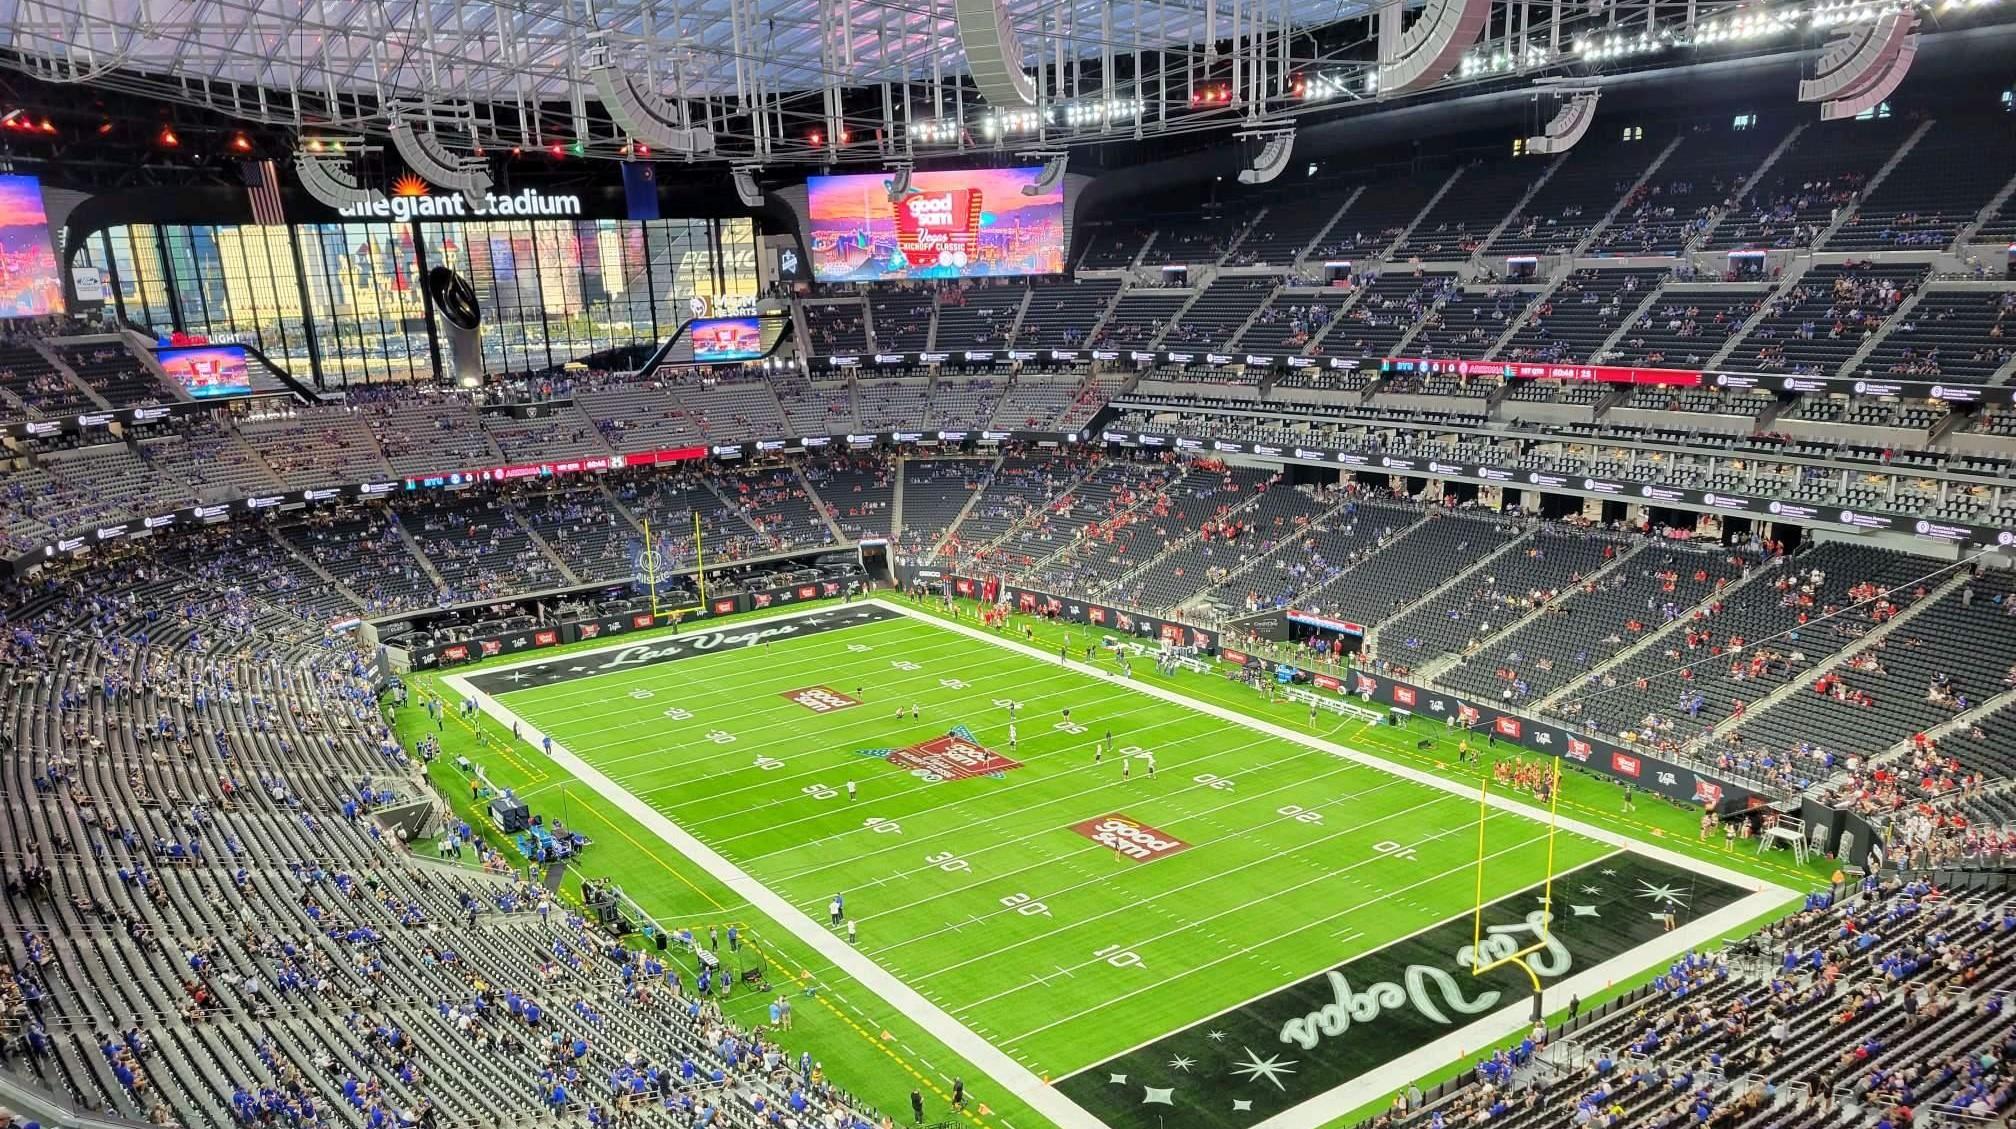 Allegiant Stadium pictured before kick-off at a Las Vegas Raiders NFL game.